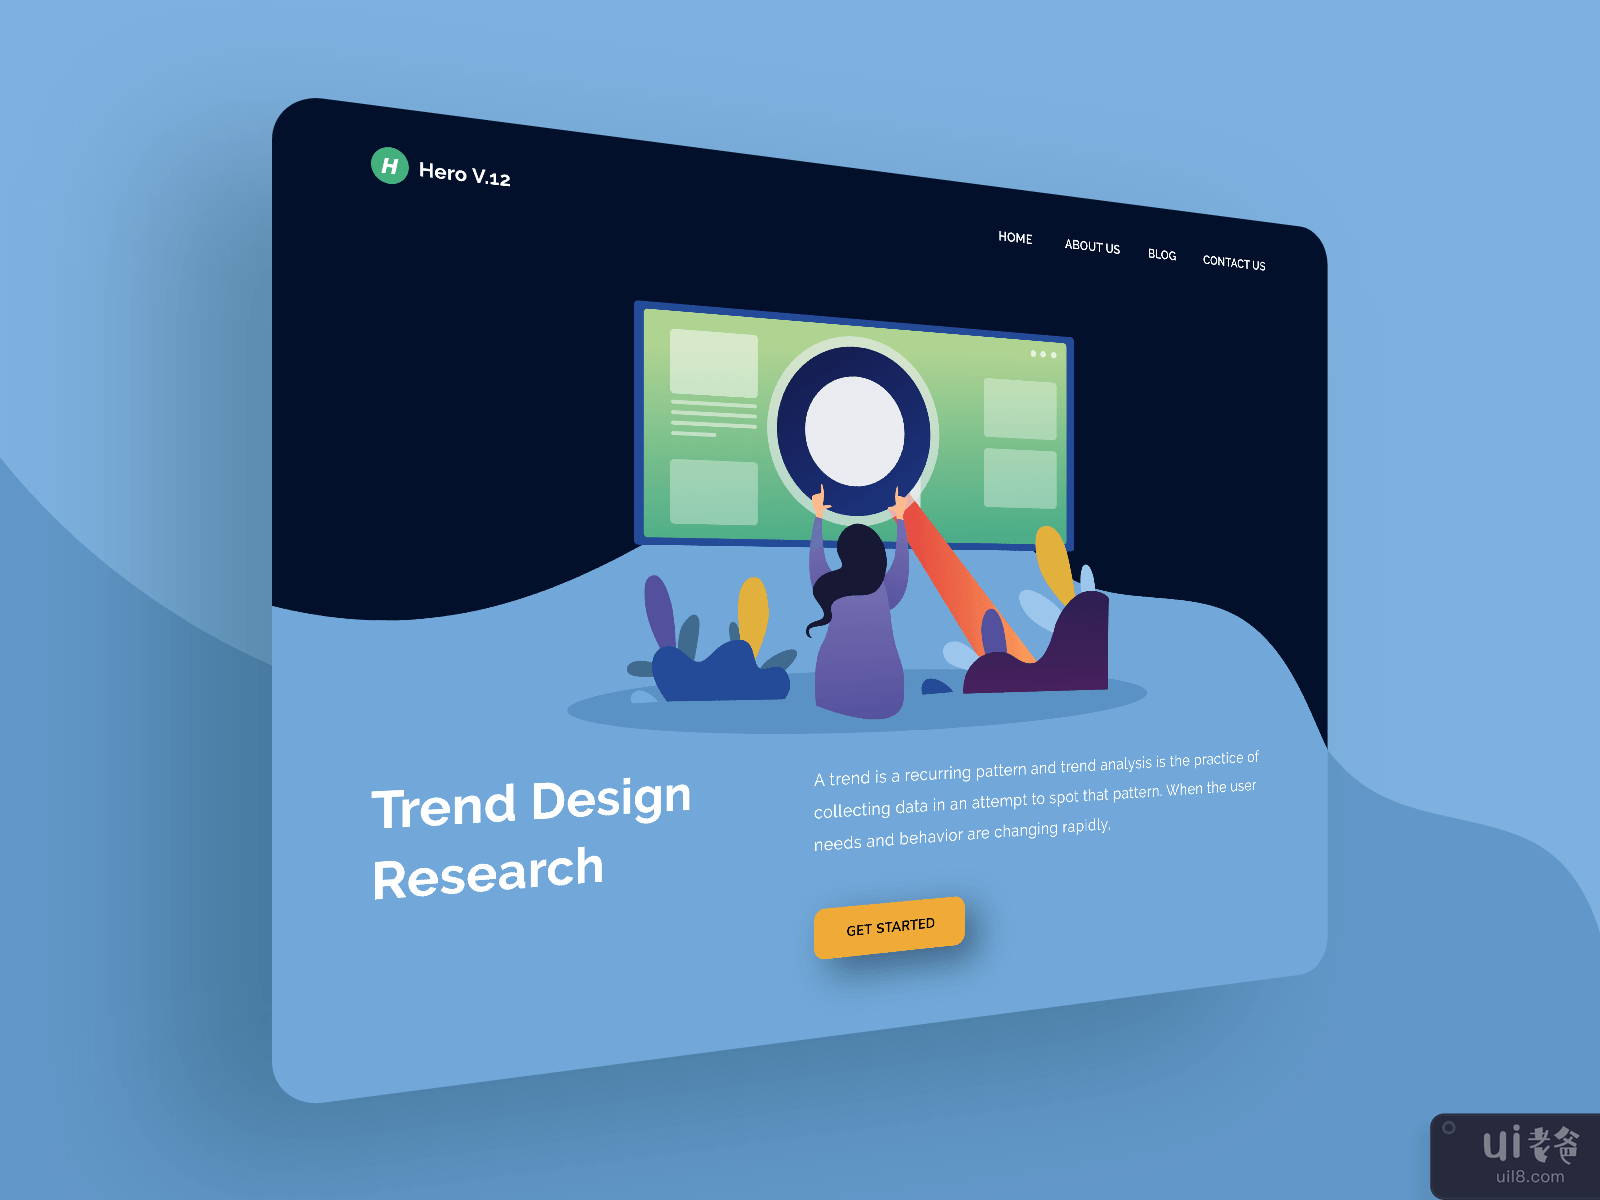 Hero V.12 Trend Design Research